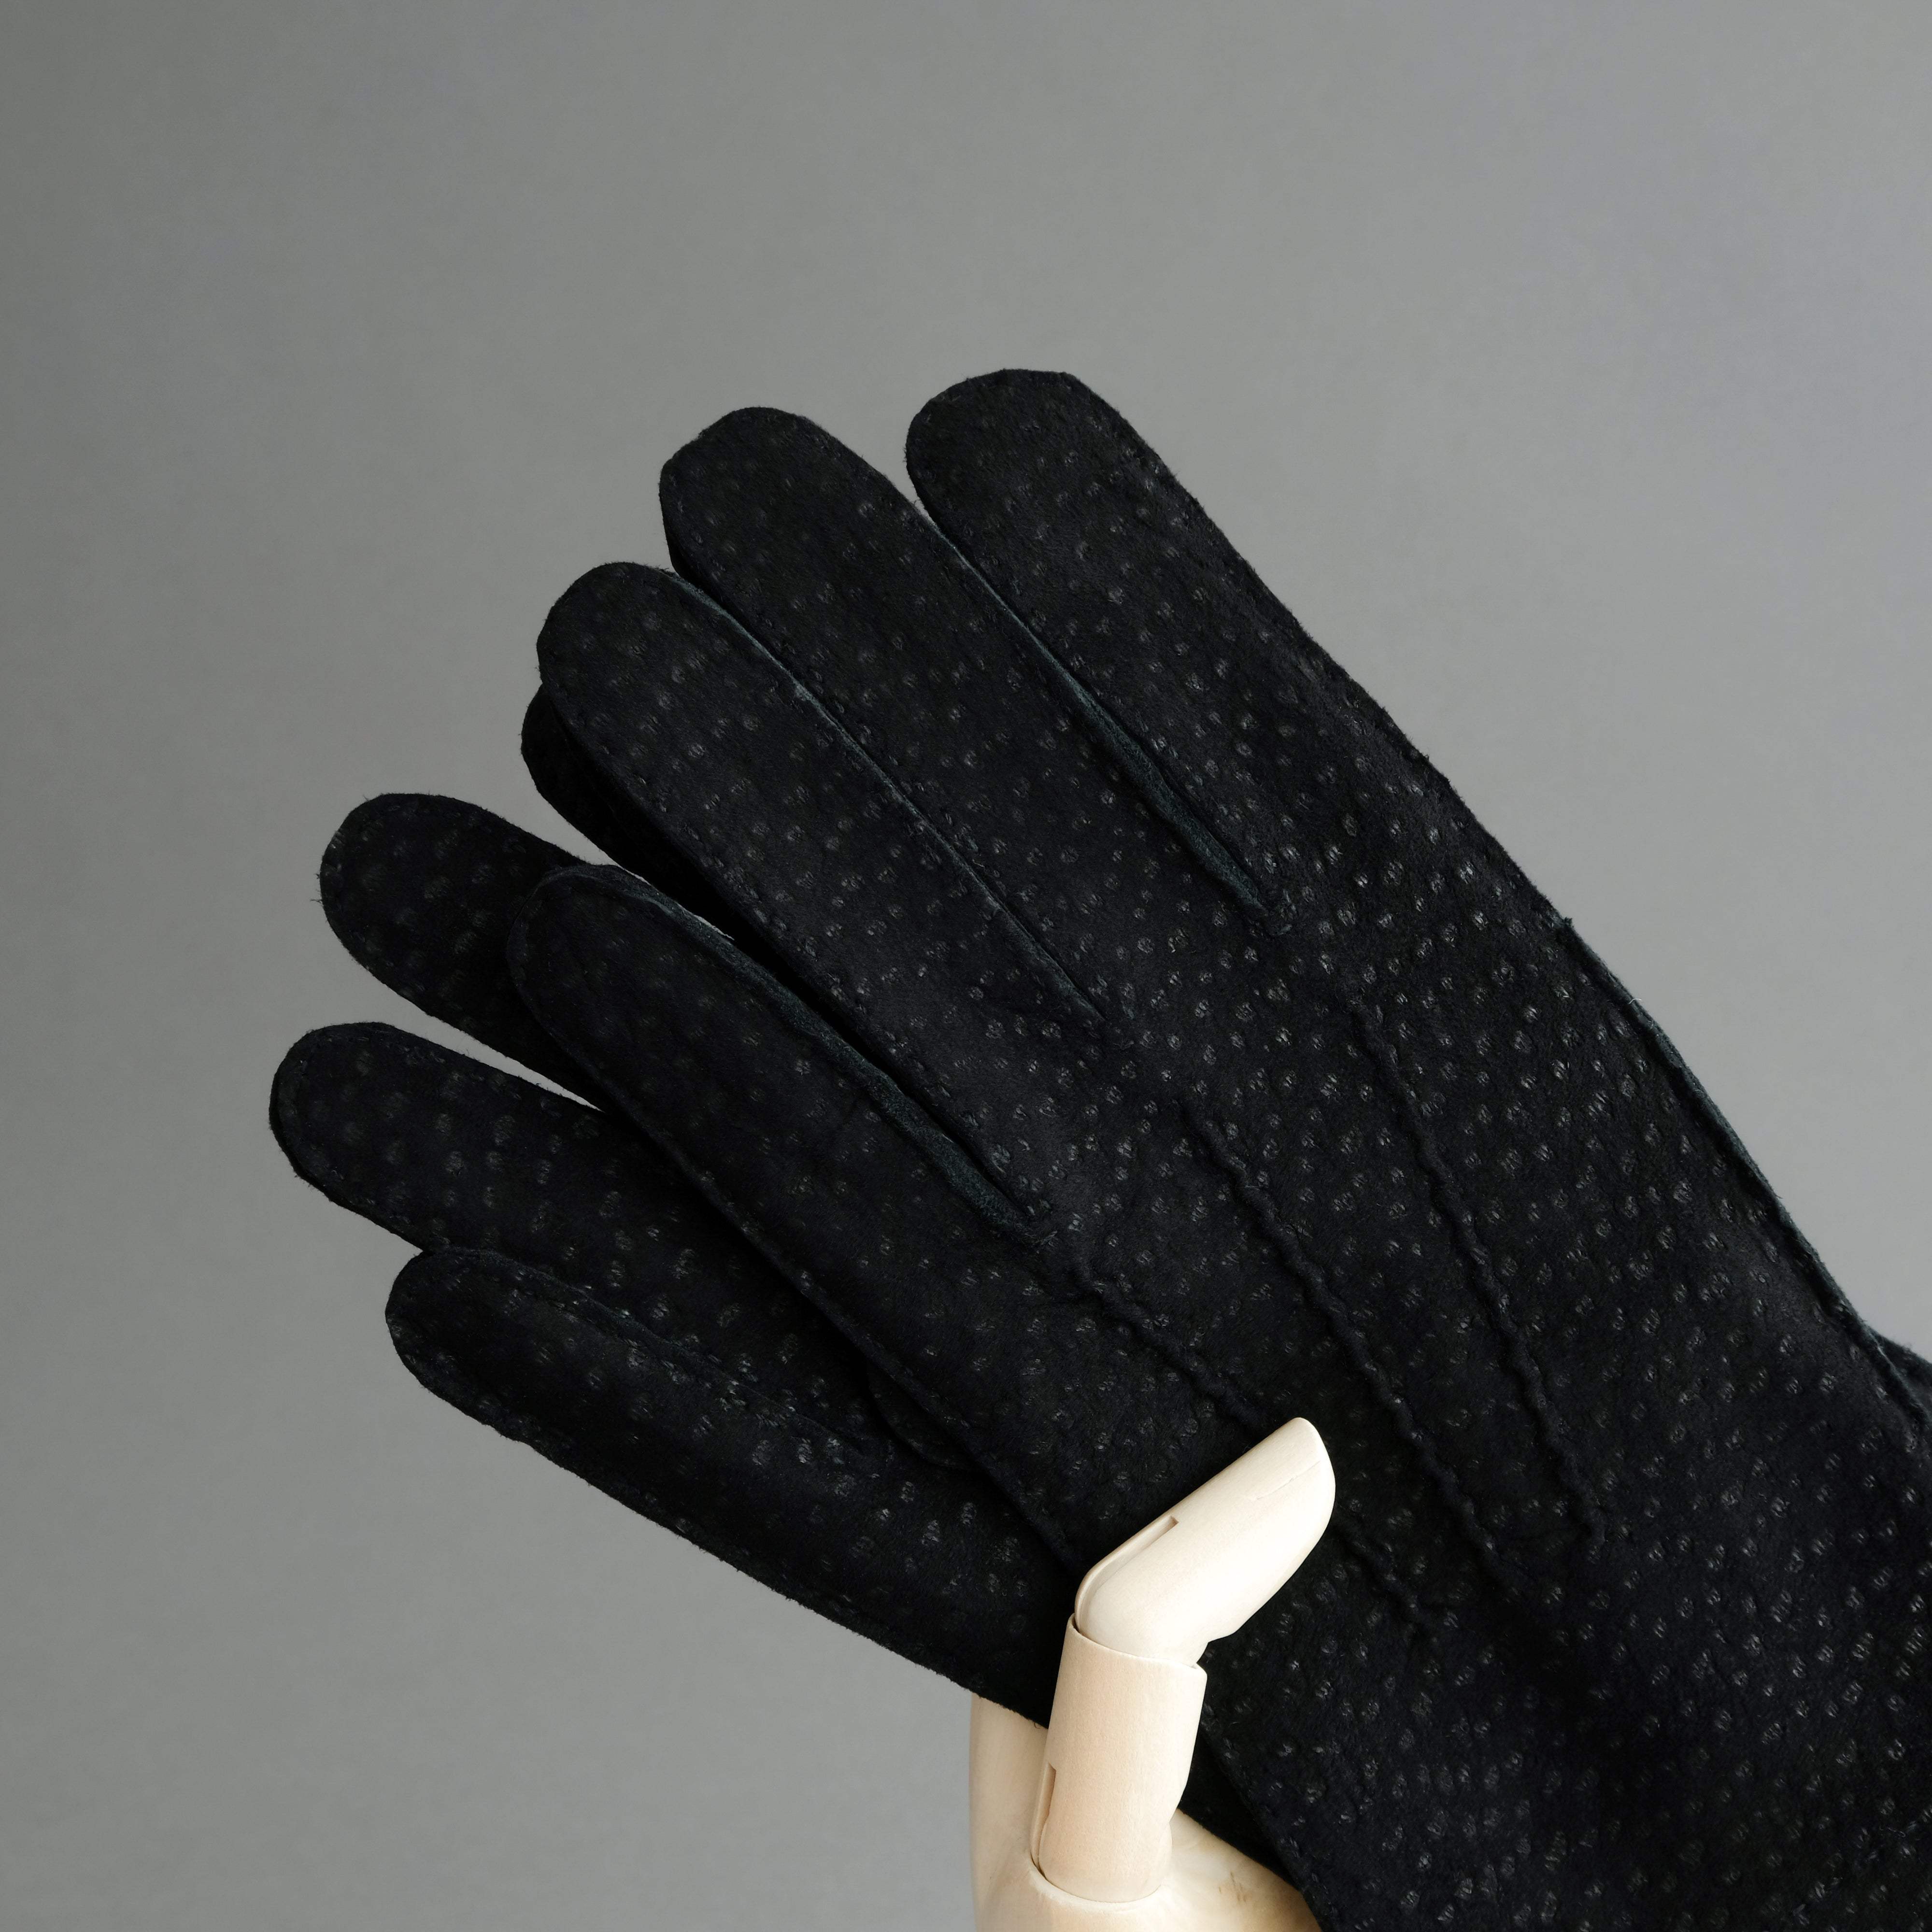 Gentlemen's Gloves from Black Carpincho Leather Lined With Cashmere - TR Handschuhe Wien - Thomas Riemer Handmade Gloves